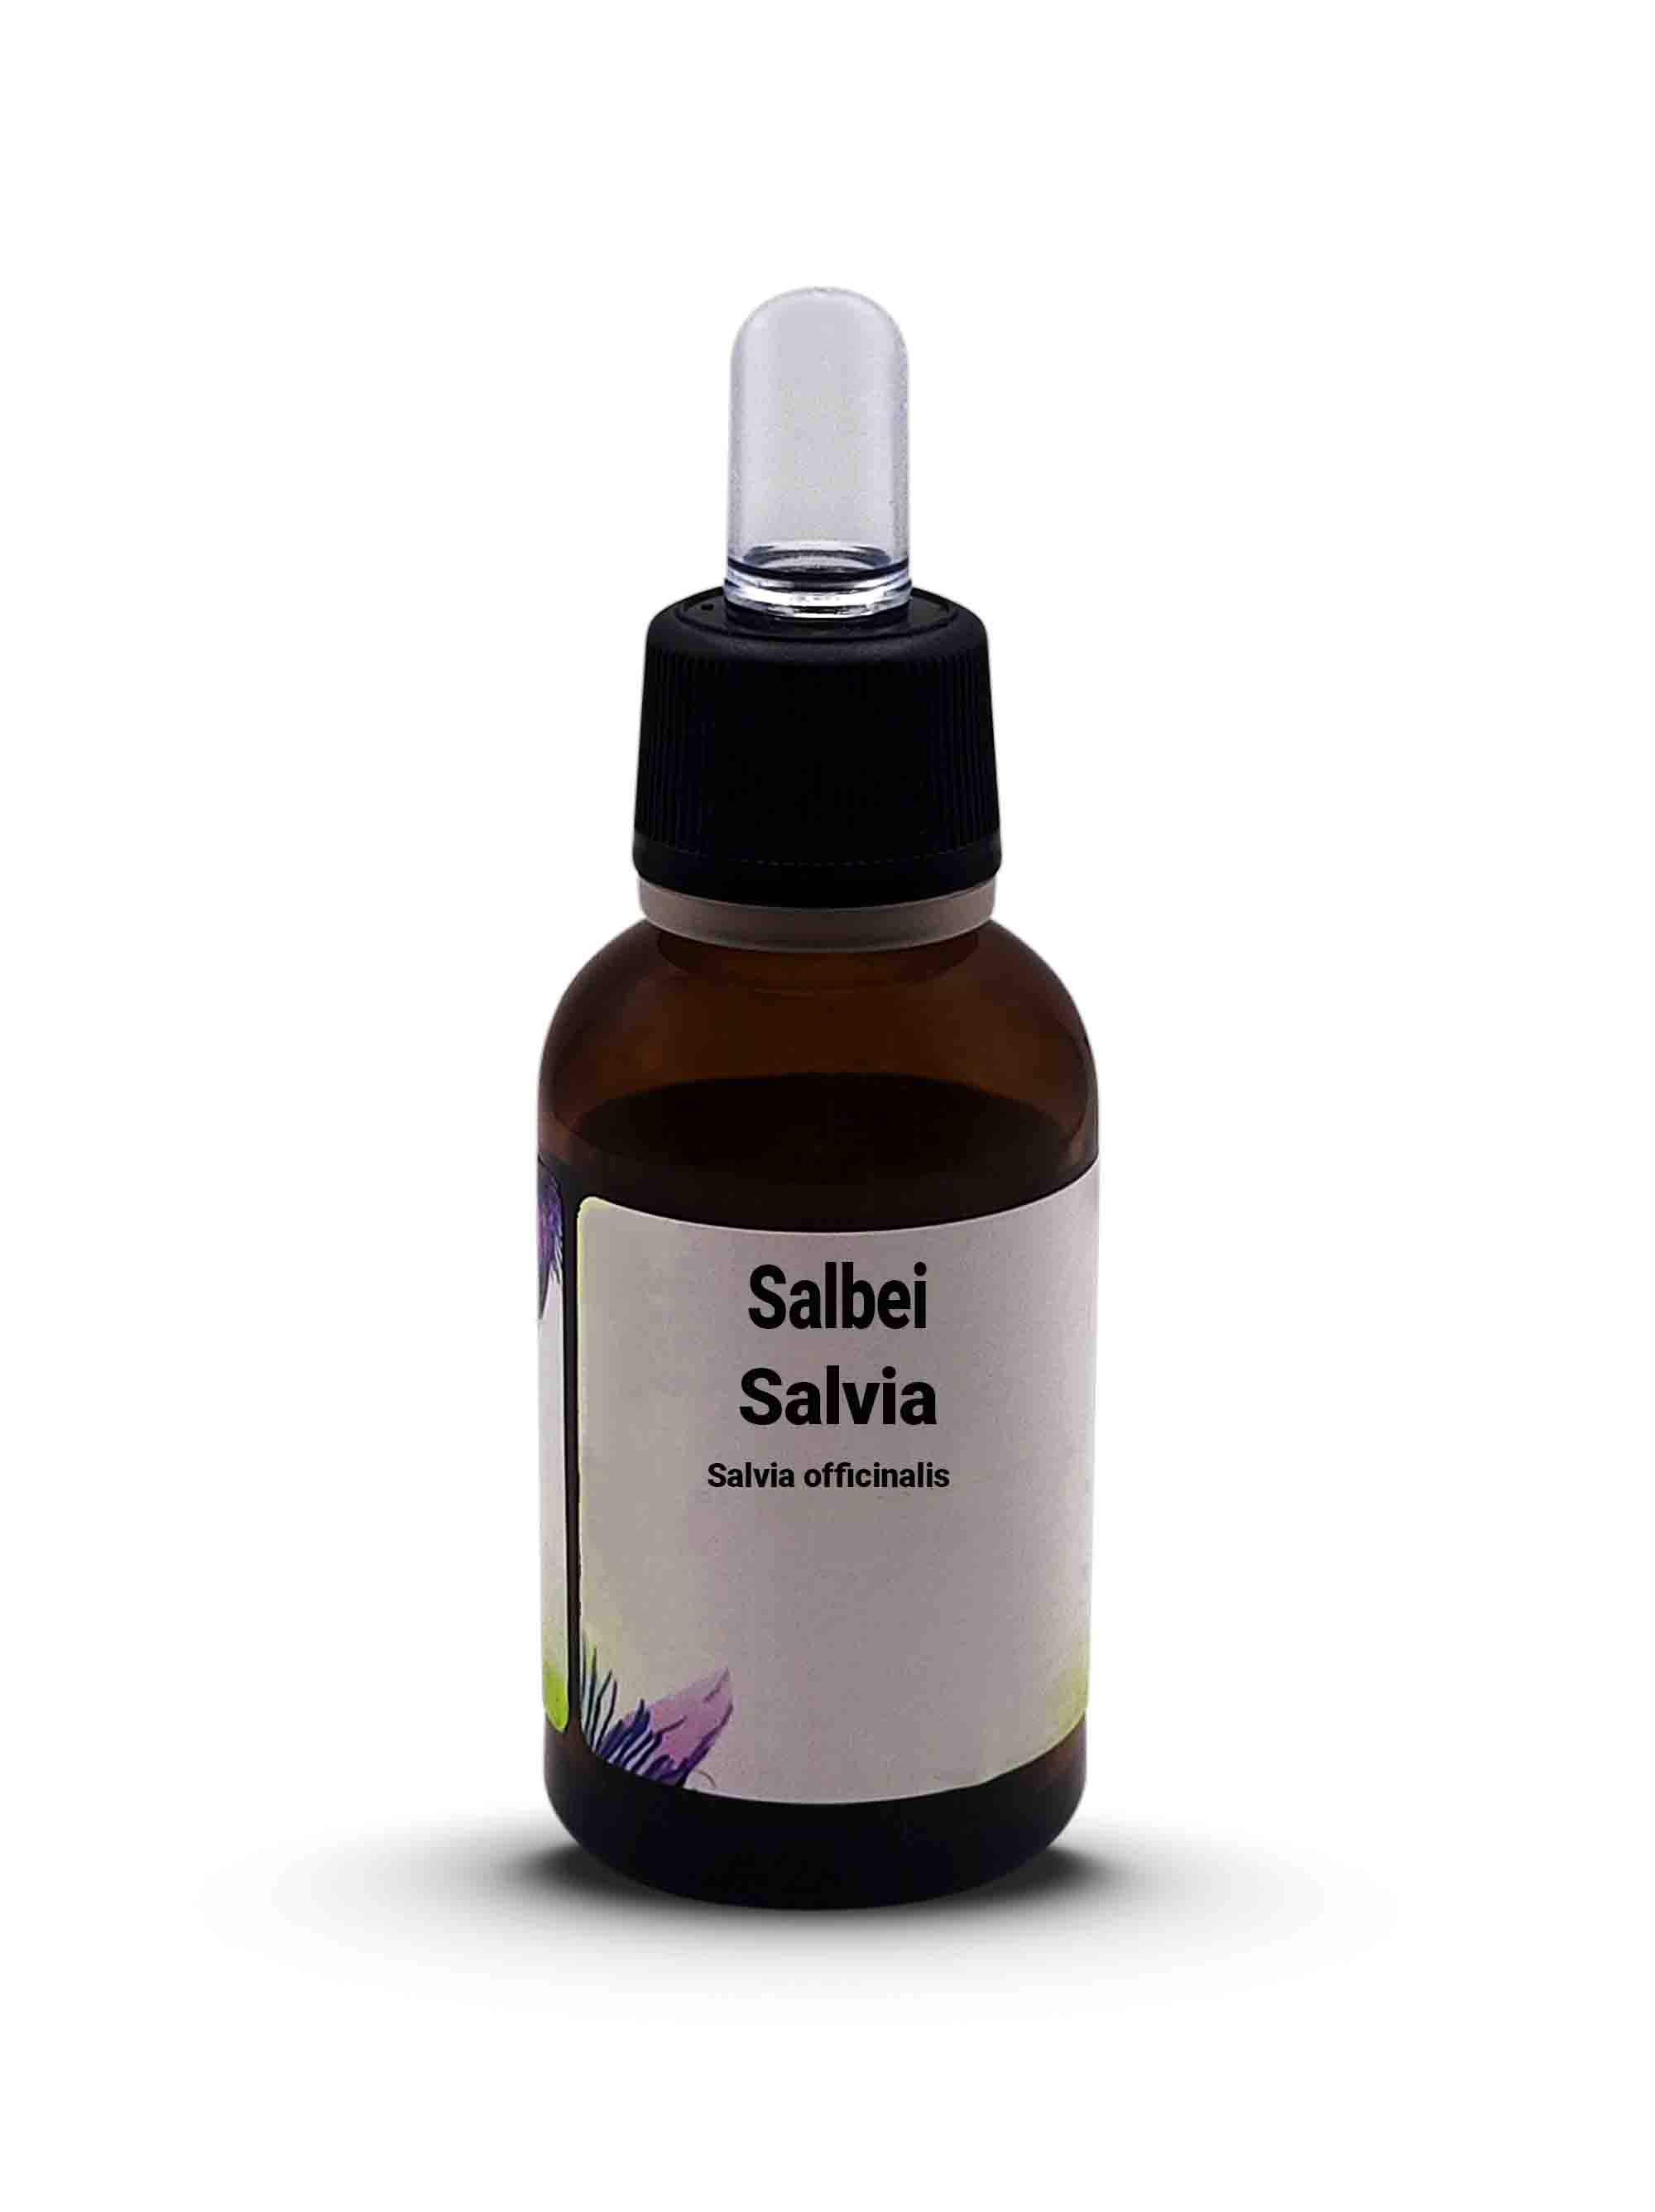 Salbei Salvia - Salvia officinalis 30 ml